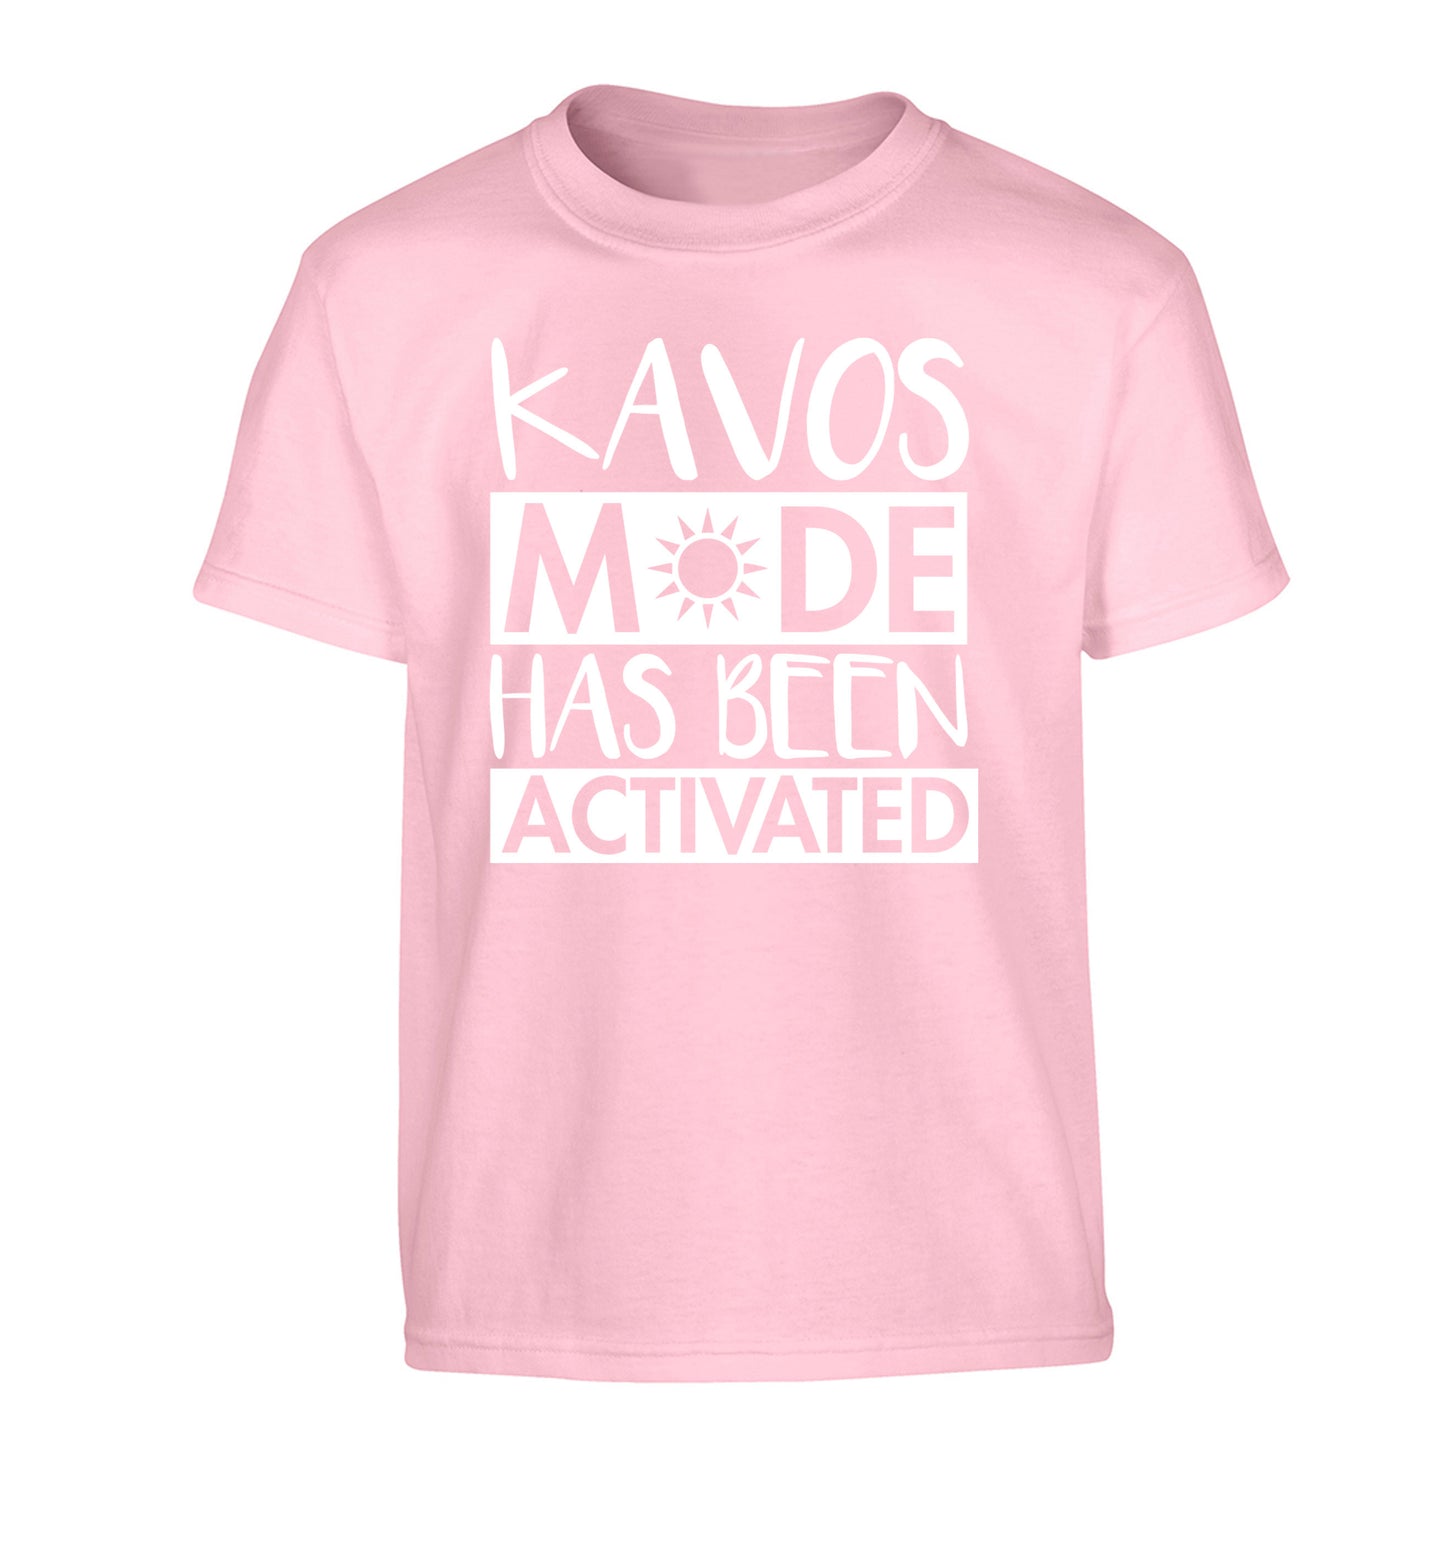 Kavos mode has been activated Children's light pink Tshirt 12-14 Years